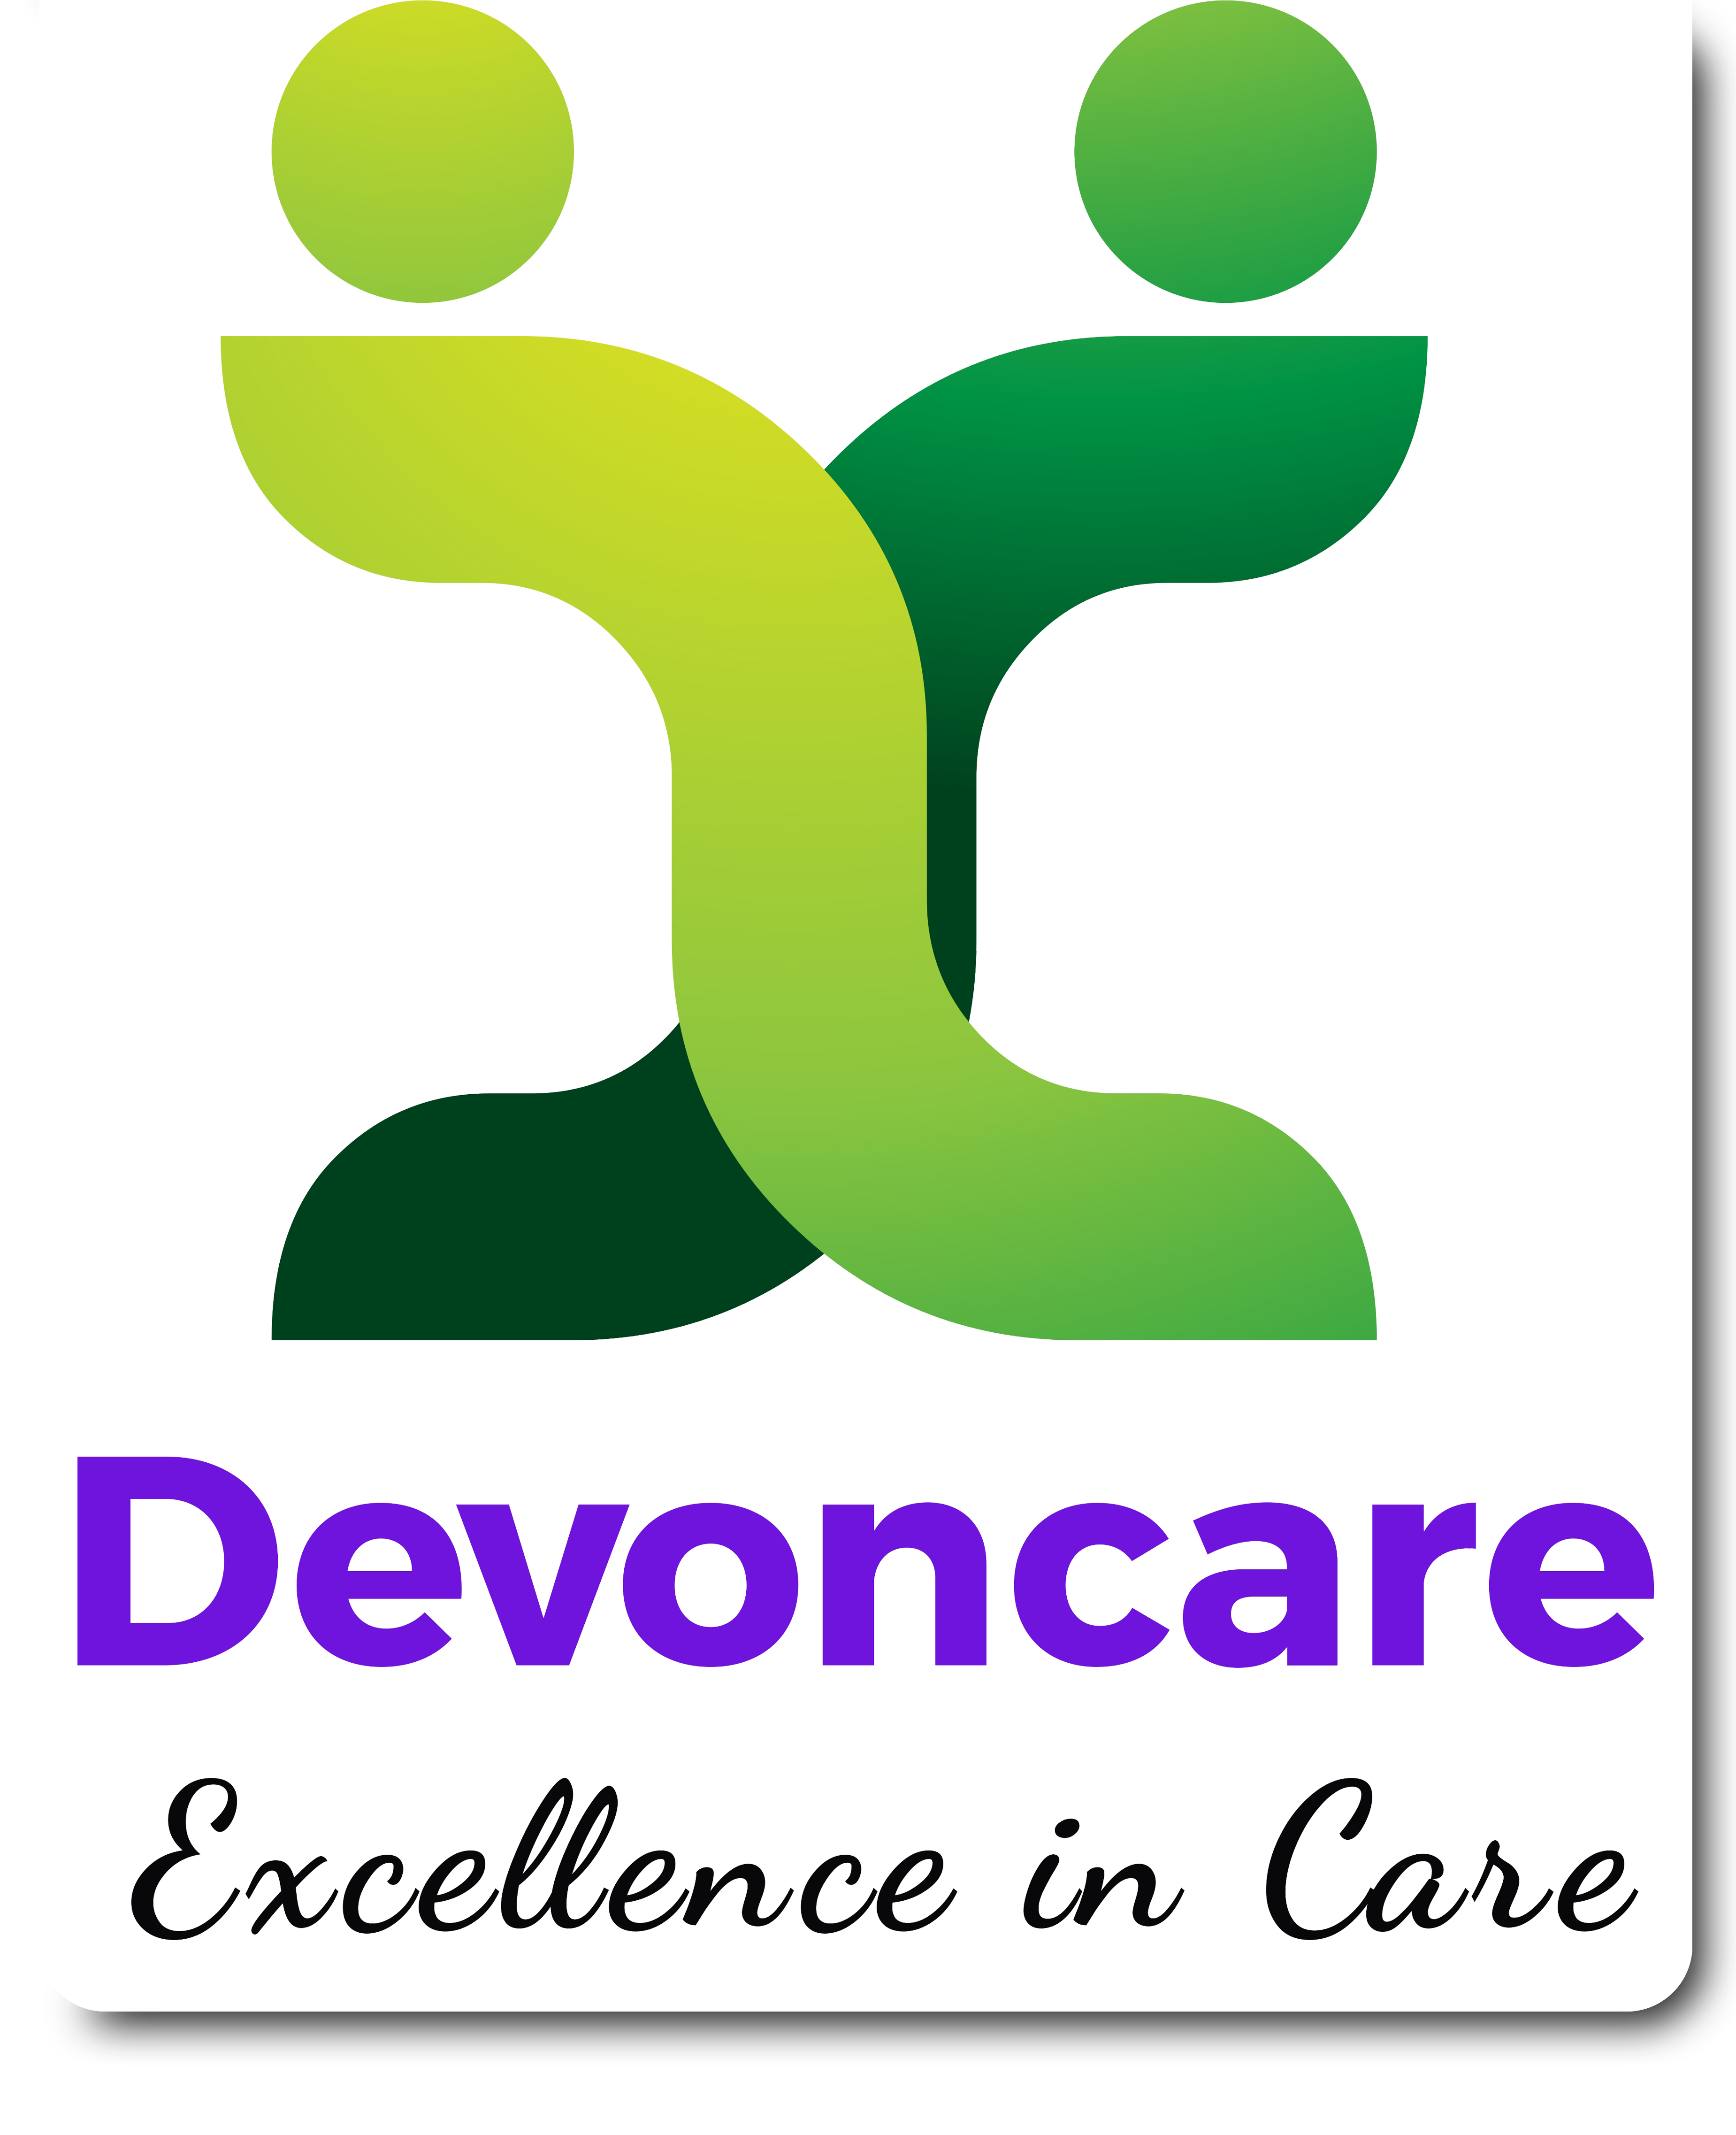 Contact us Devoncare